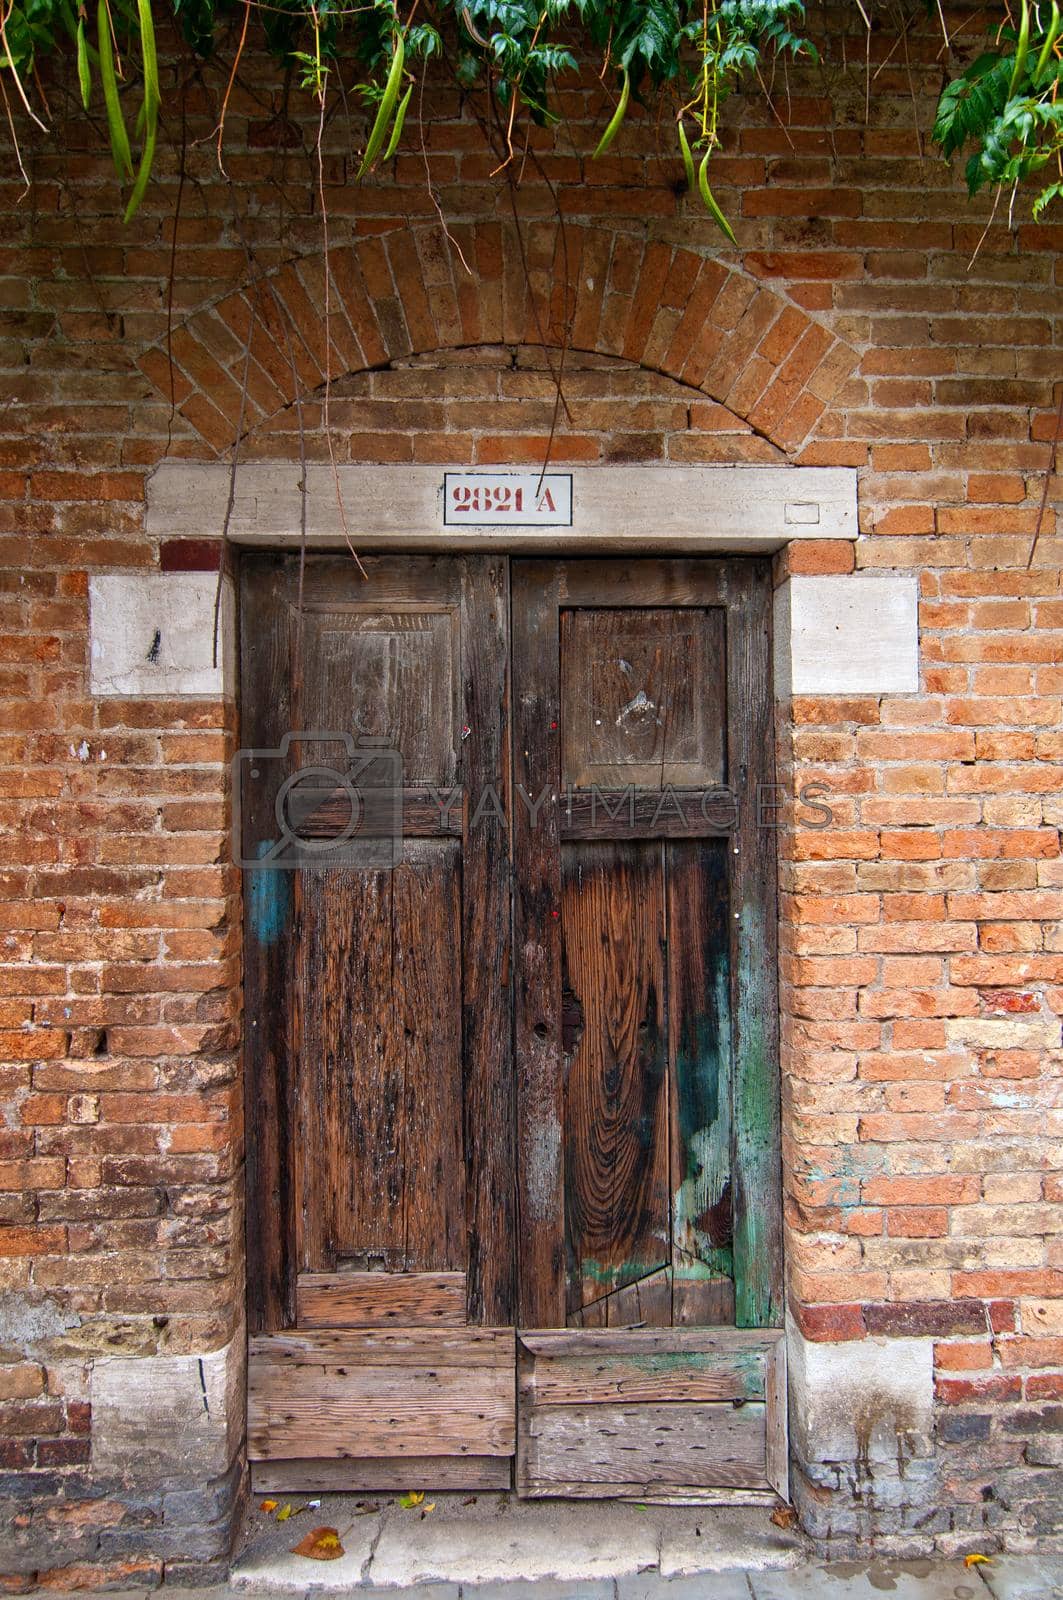 Royalty free image of Venice Italy old door by keko64